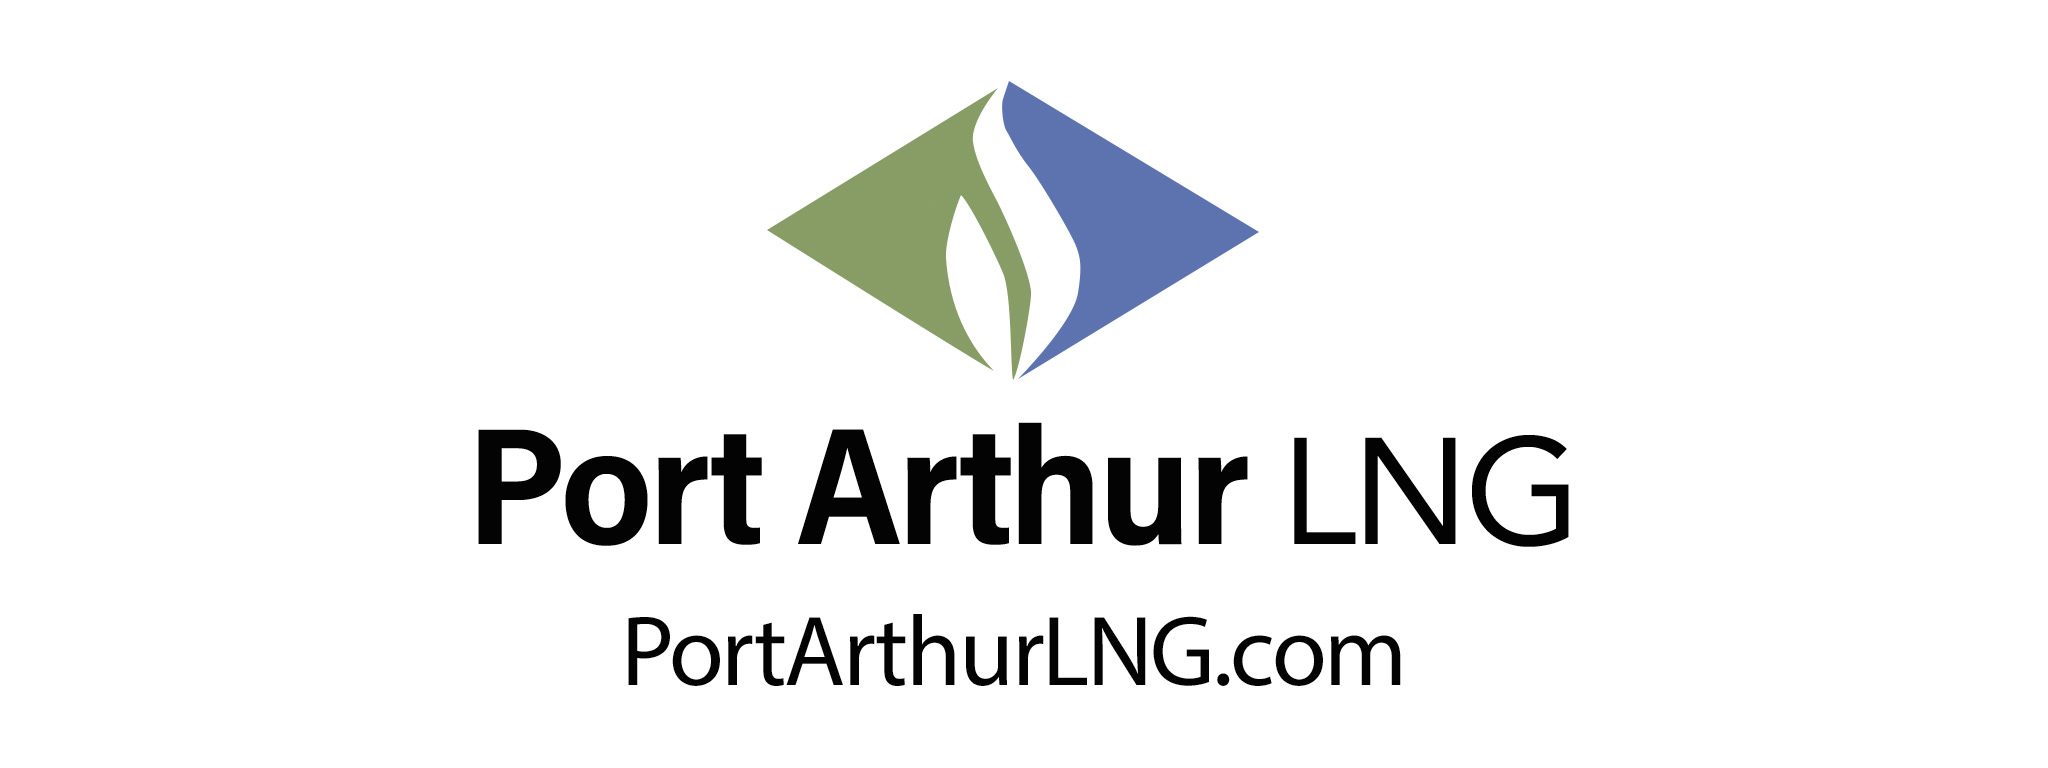 Port Arthur LNG